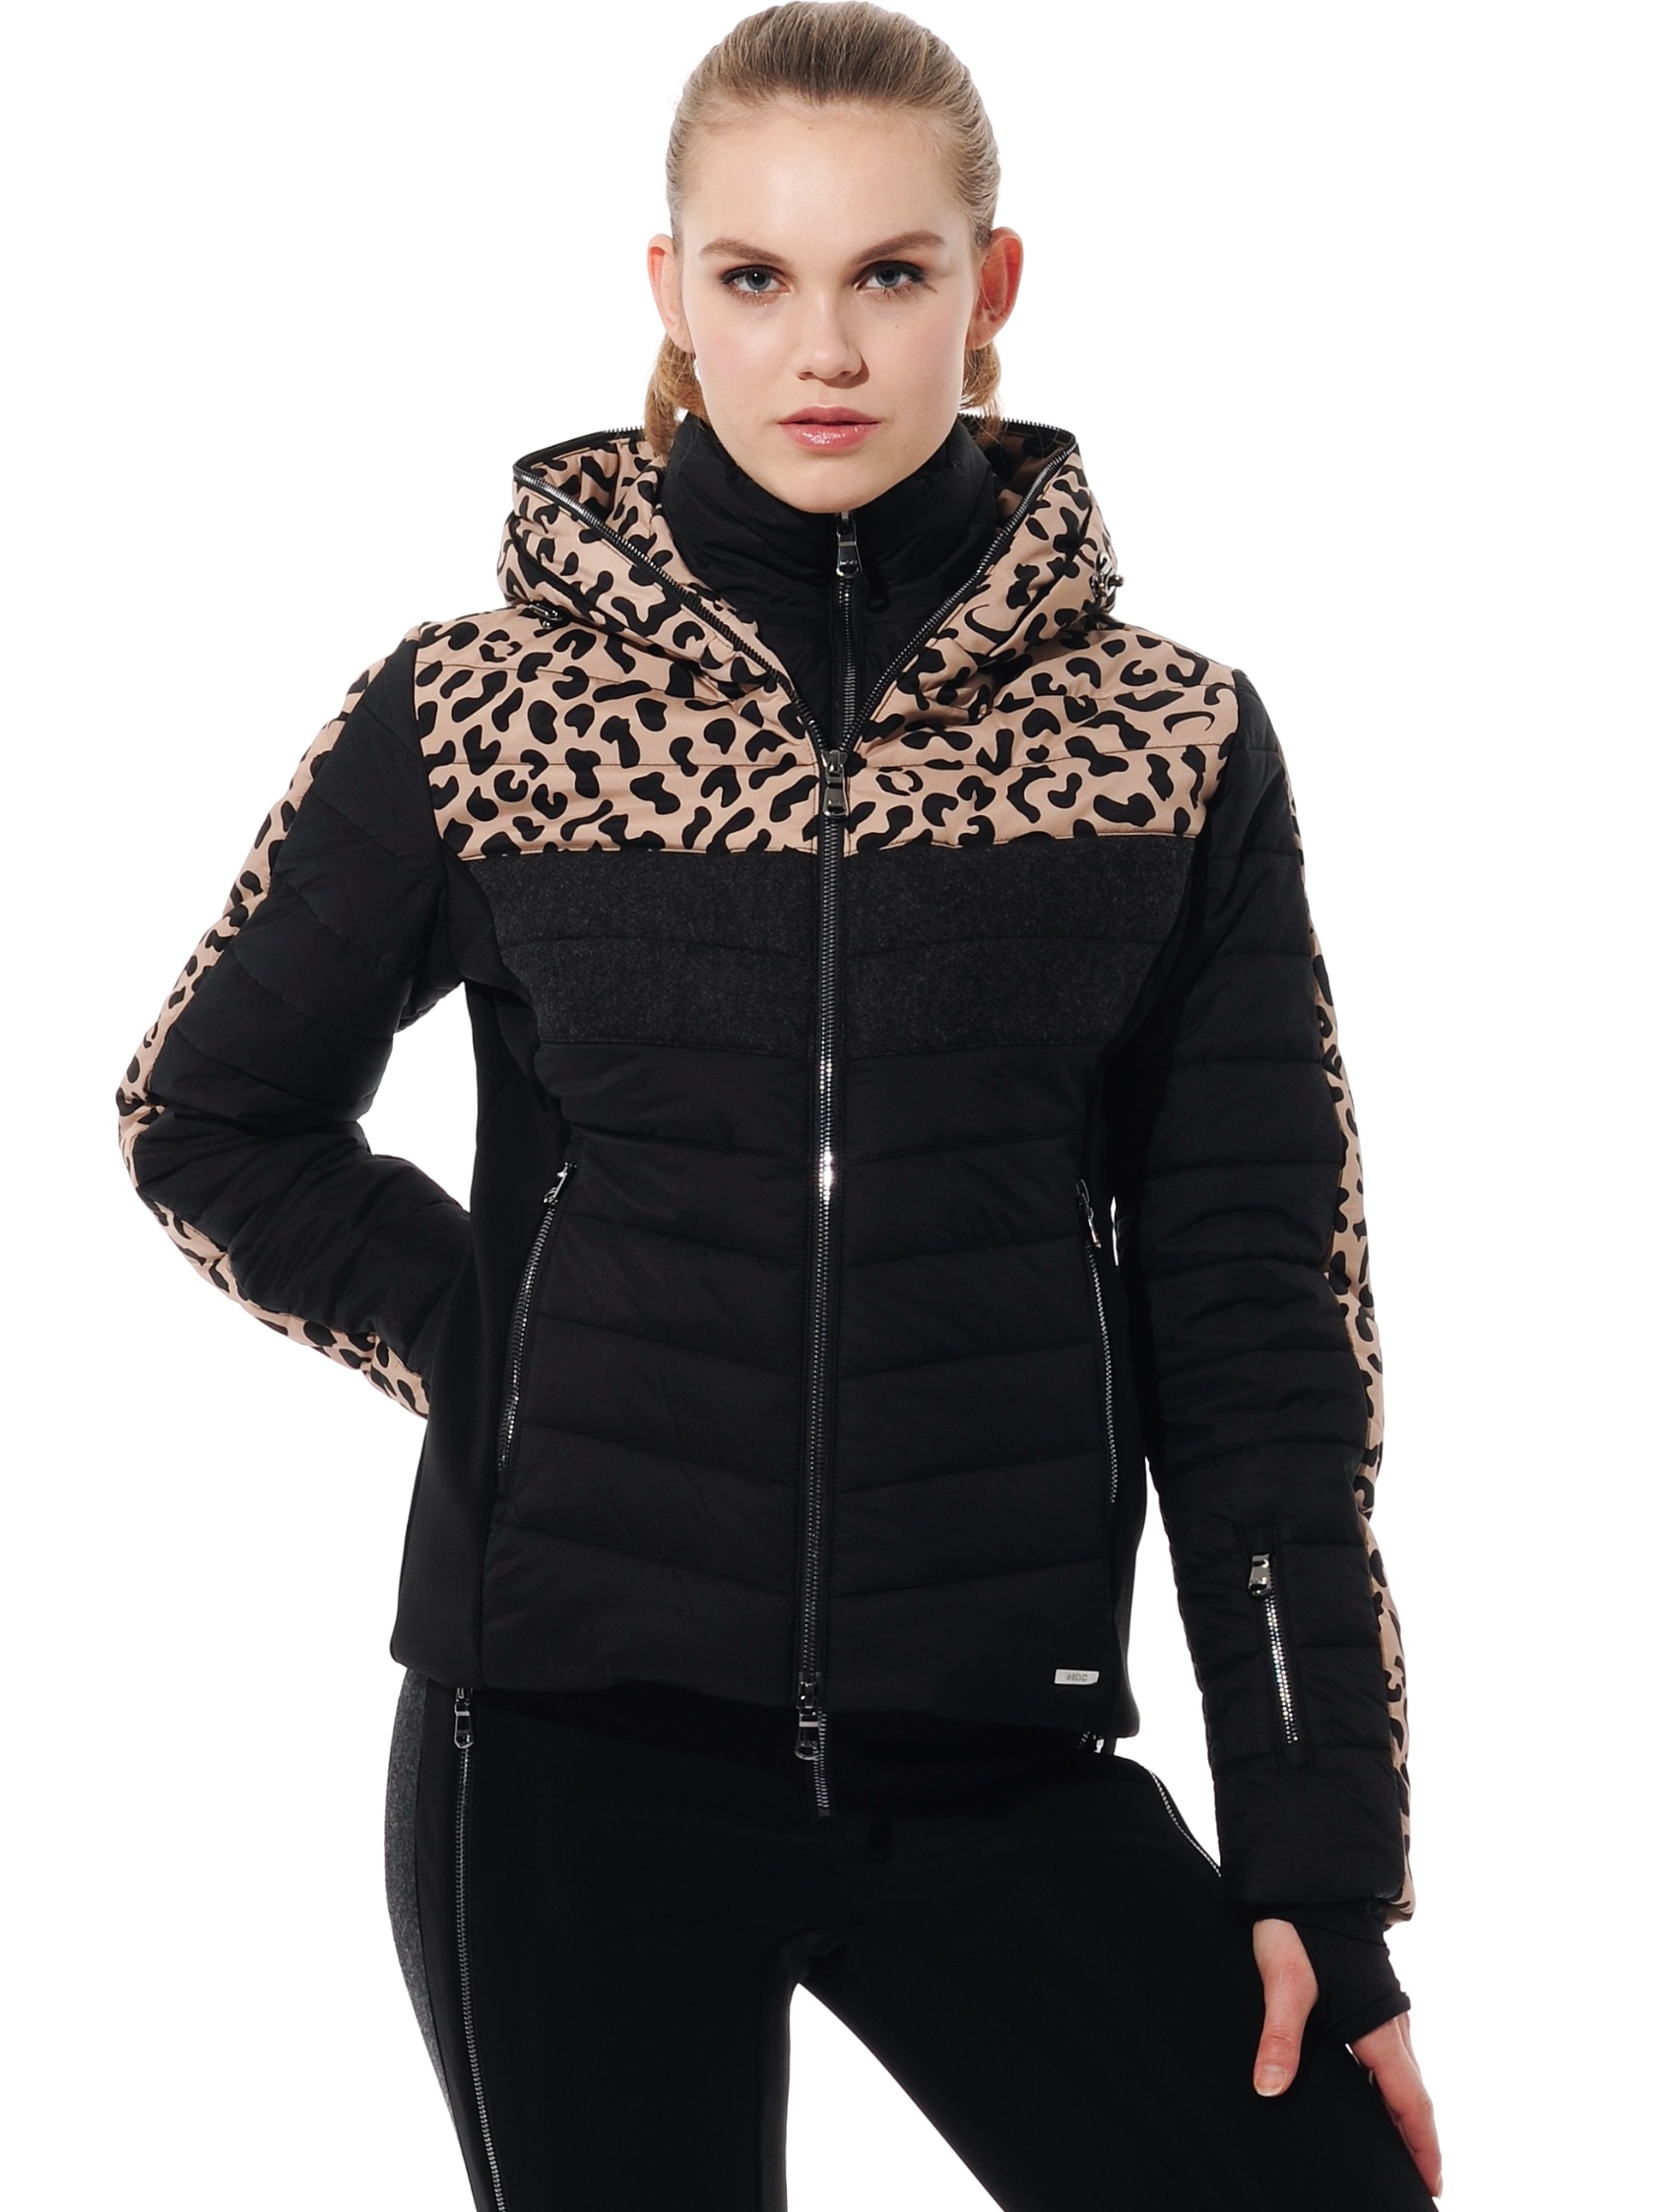 ski jacket with print details black/taupe 